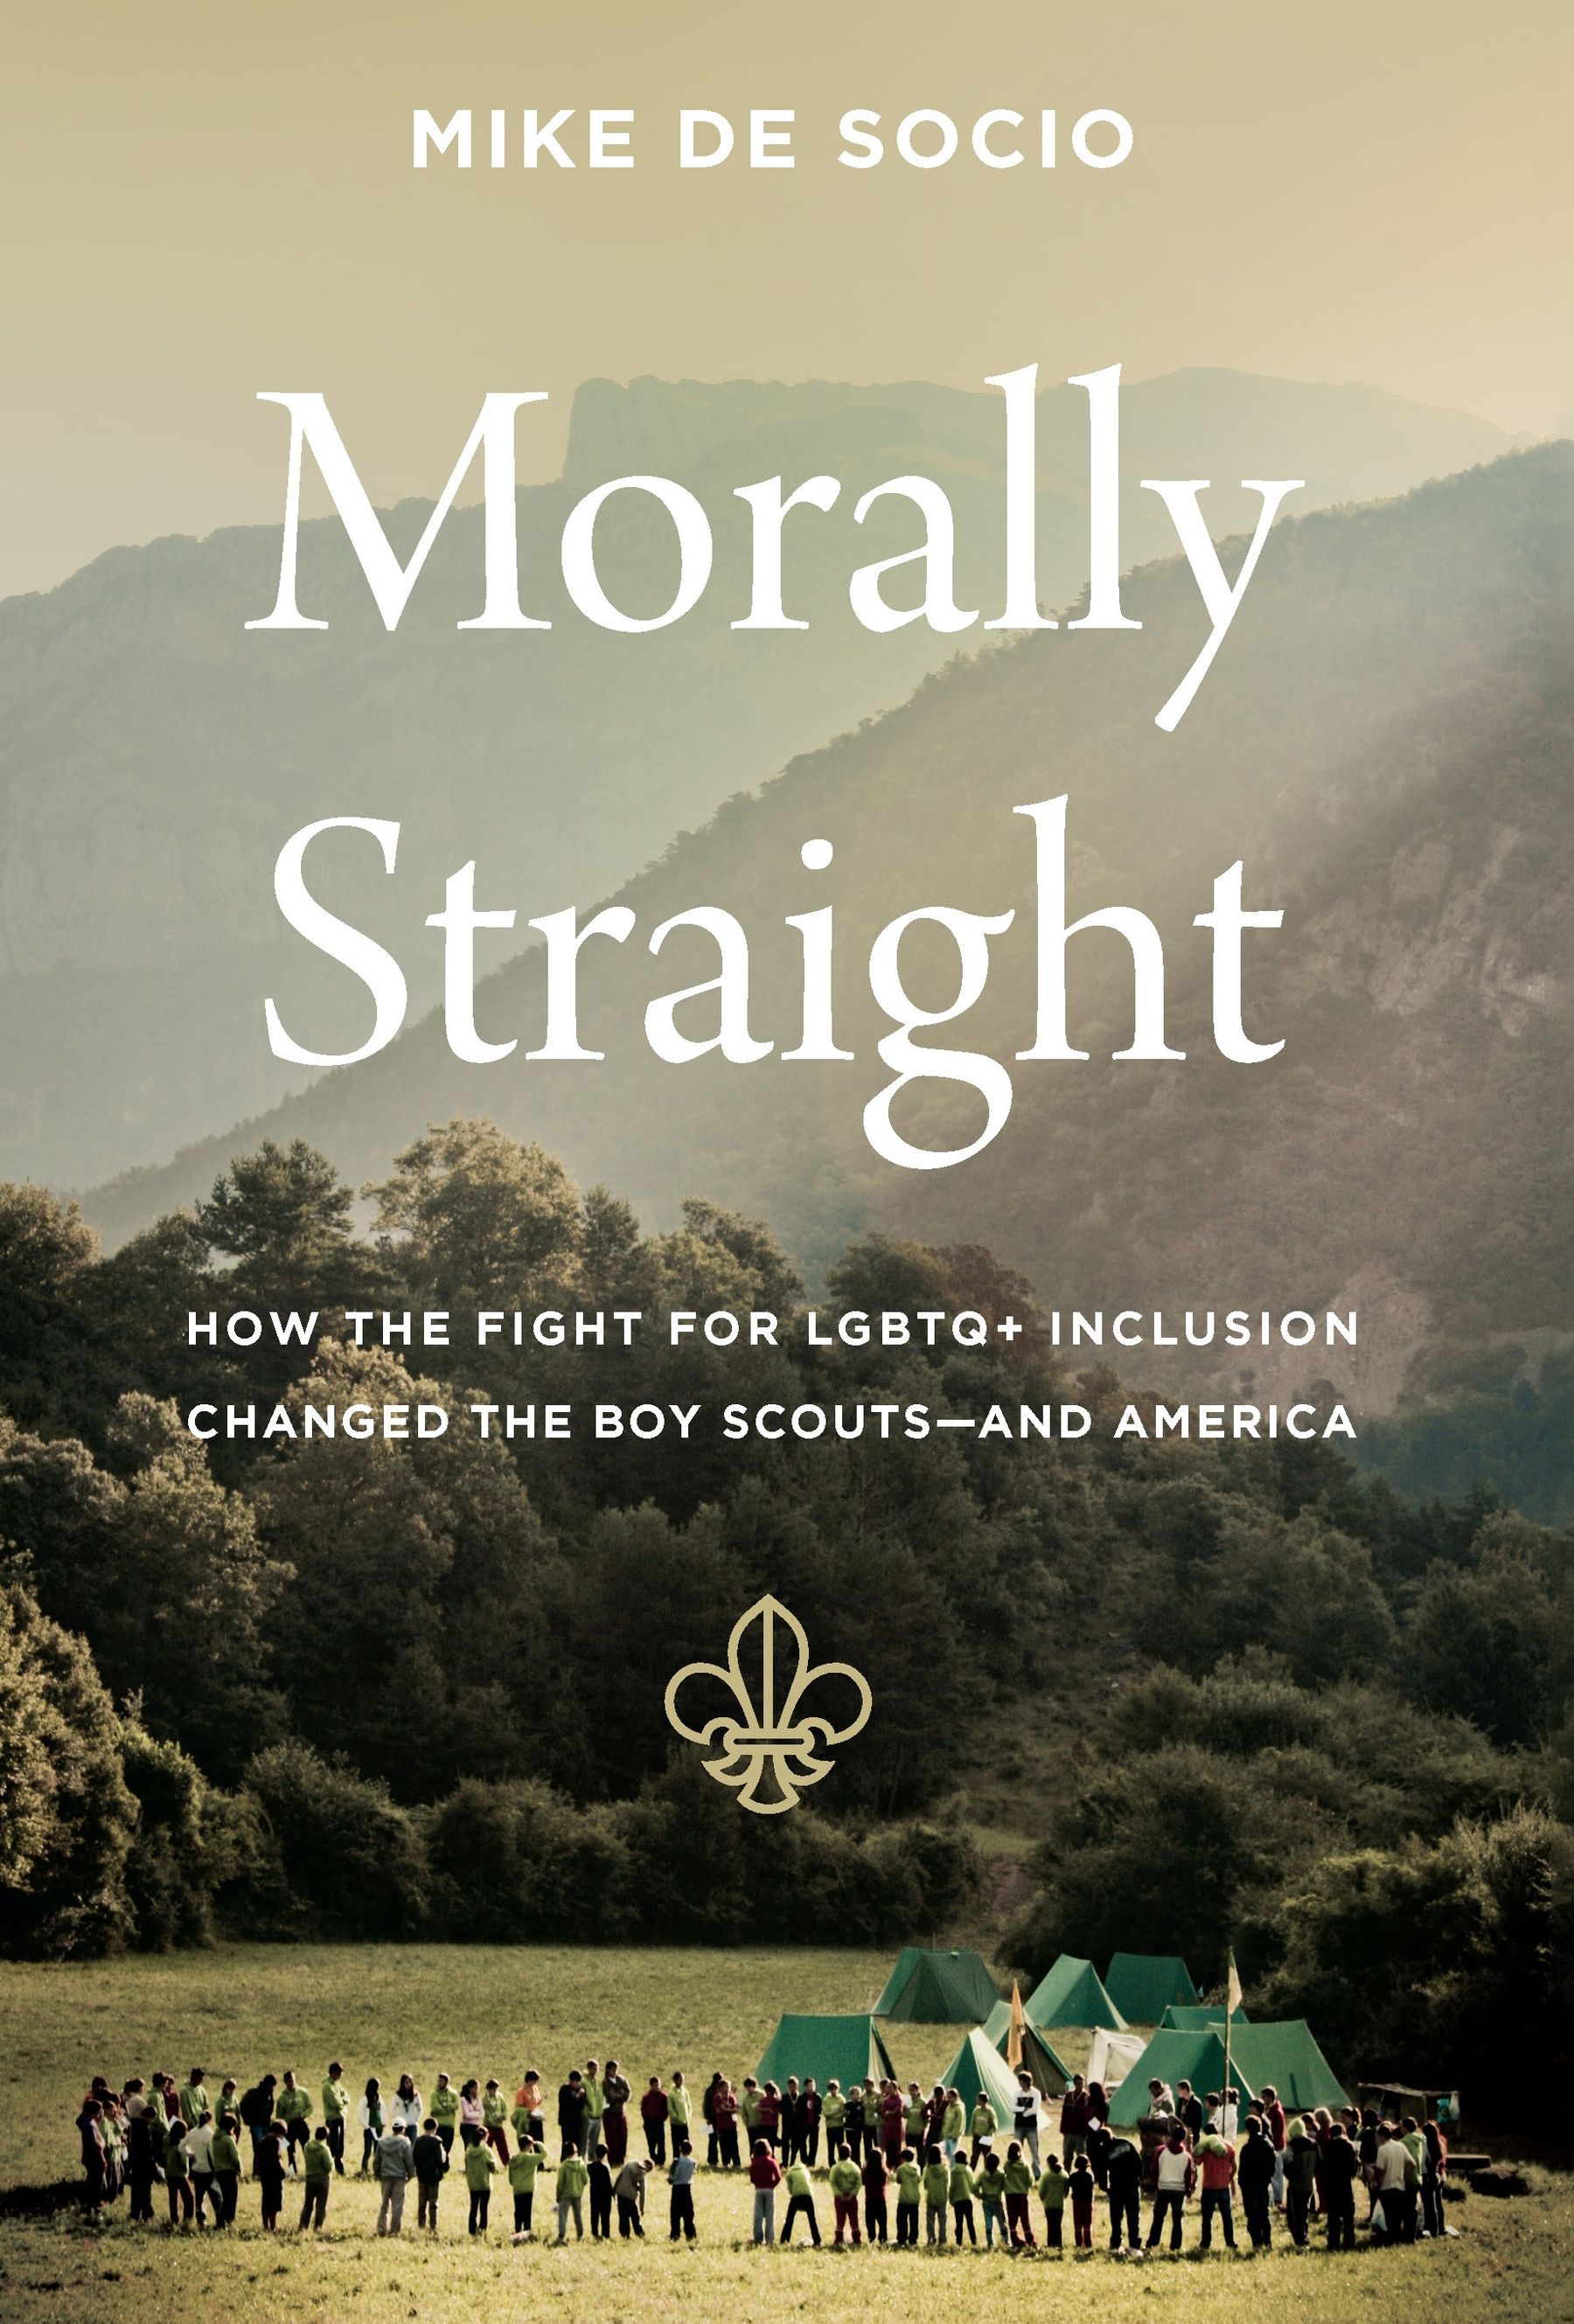 Mike De Socio -- "Morally Straight," with Sam Aronson